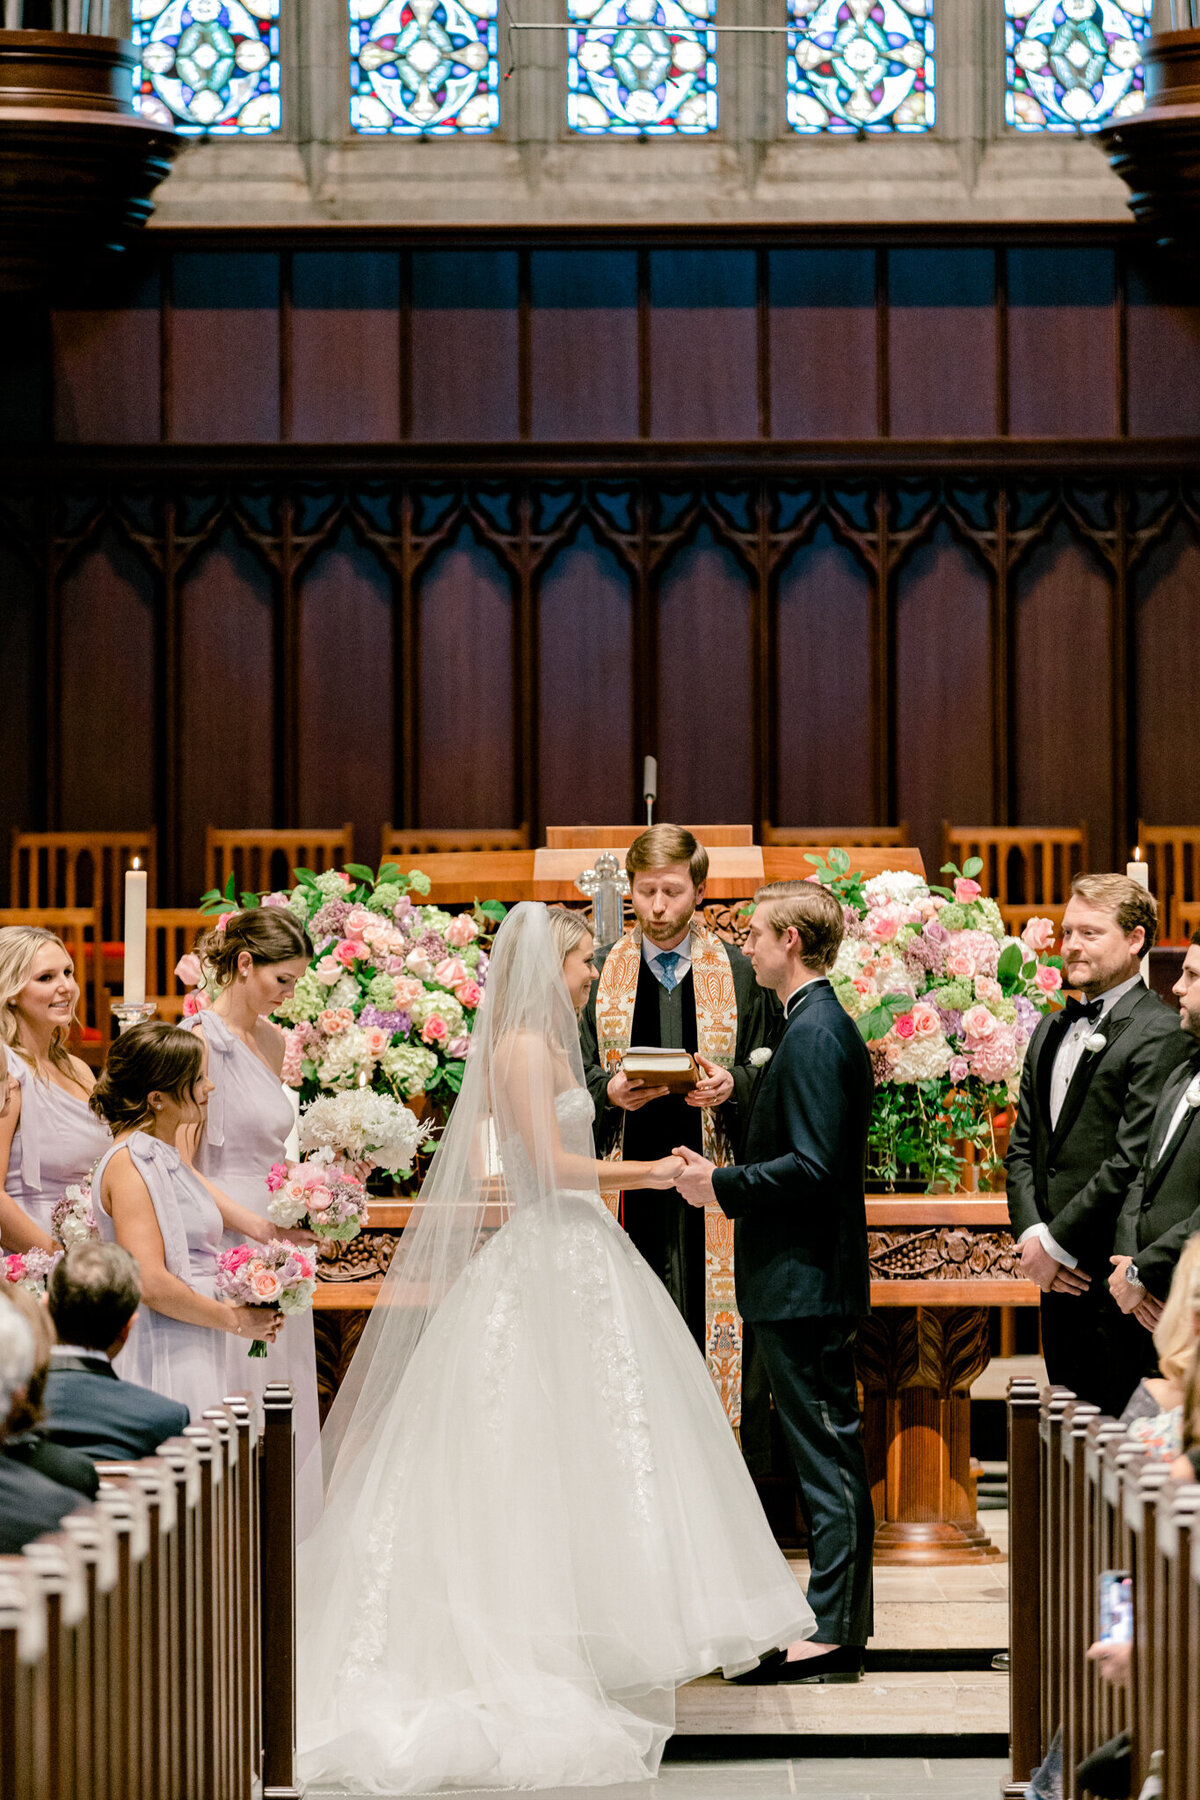 Shelby & Thomas's Wedding at HPUMC The Room on Main | Dallas Wedding Photographer | Sami Kathryn Photography-124